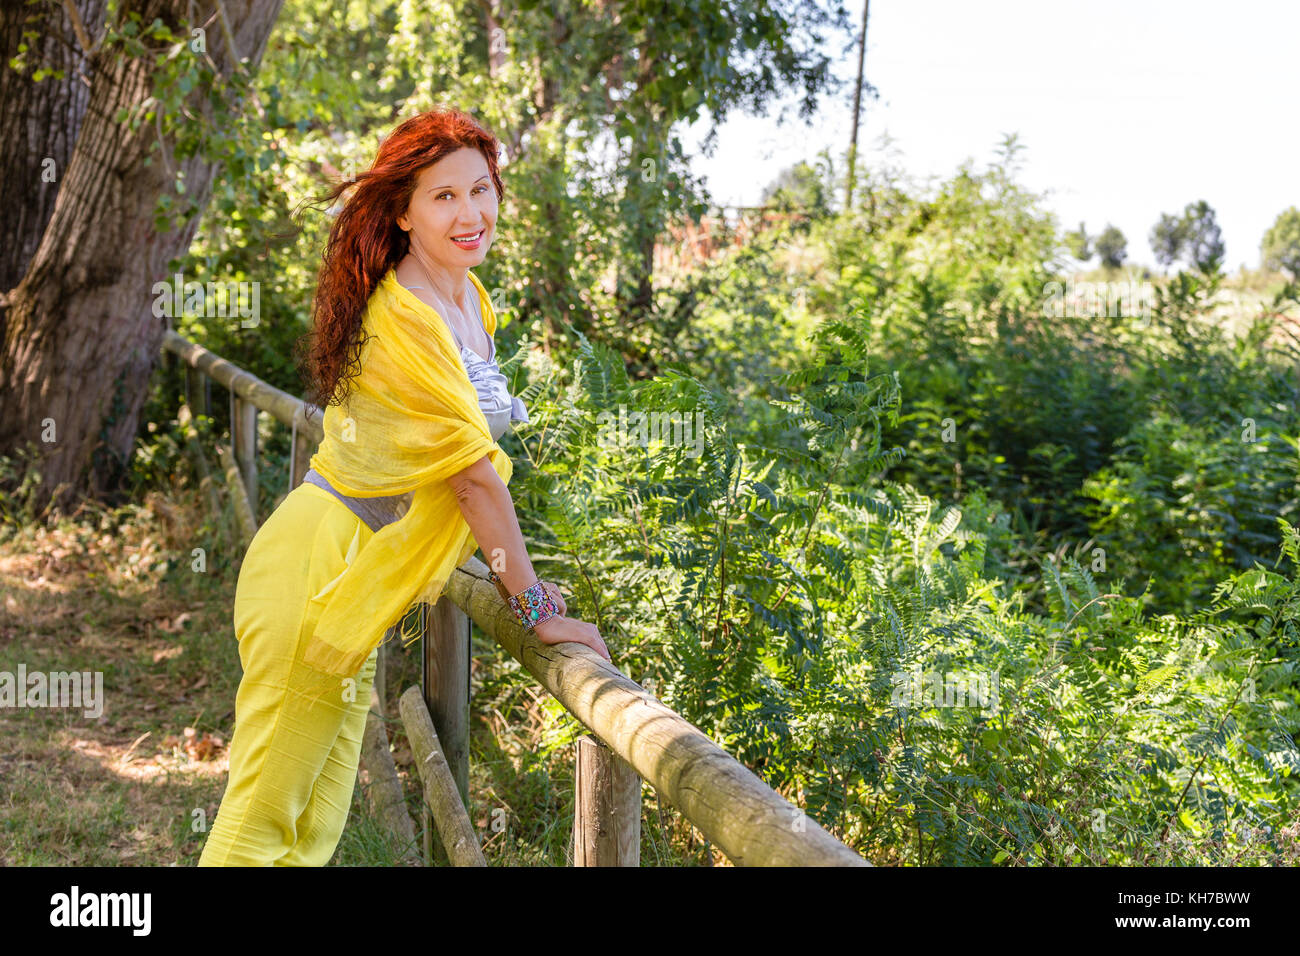 Elegante donna brasiliana con mantello giallo e scialle e silver top è sorridente in un parco verde Foto Stock